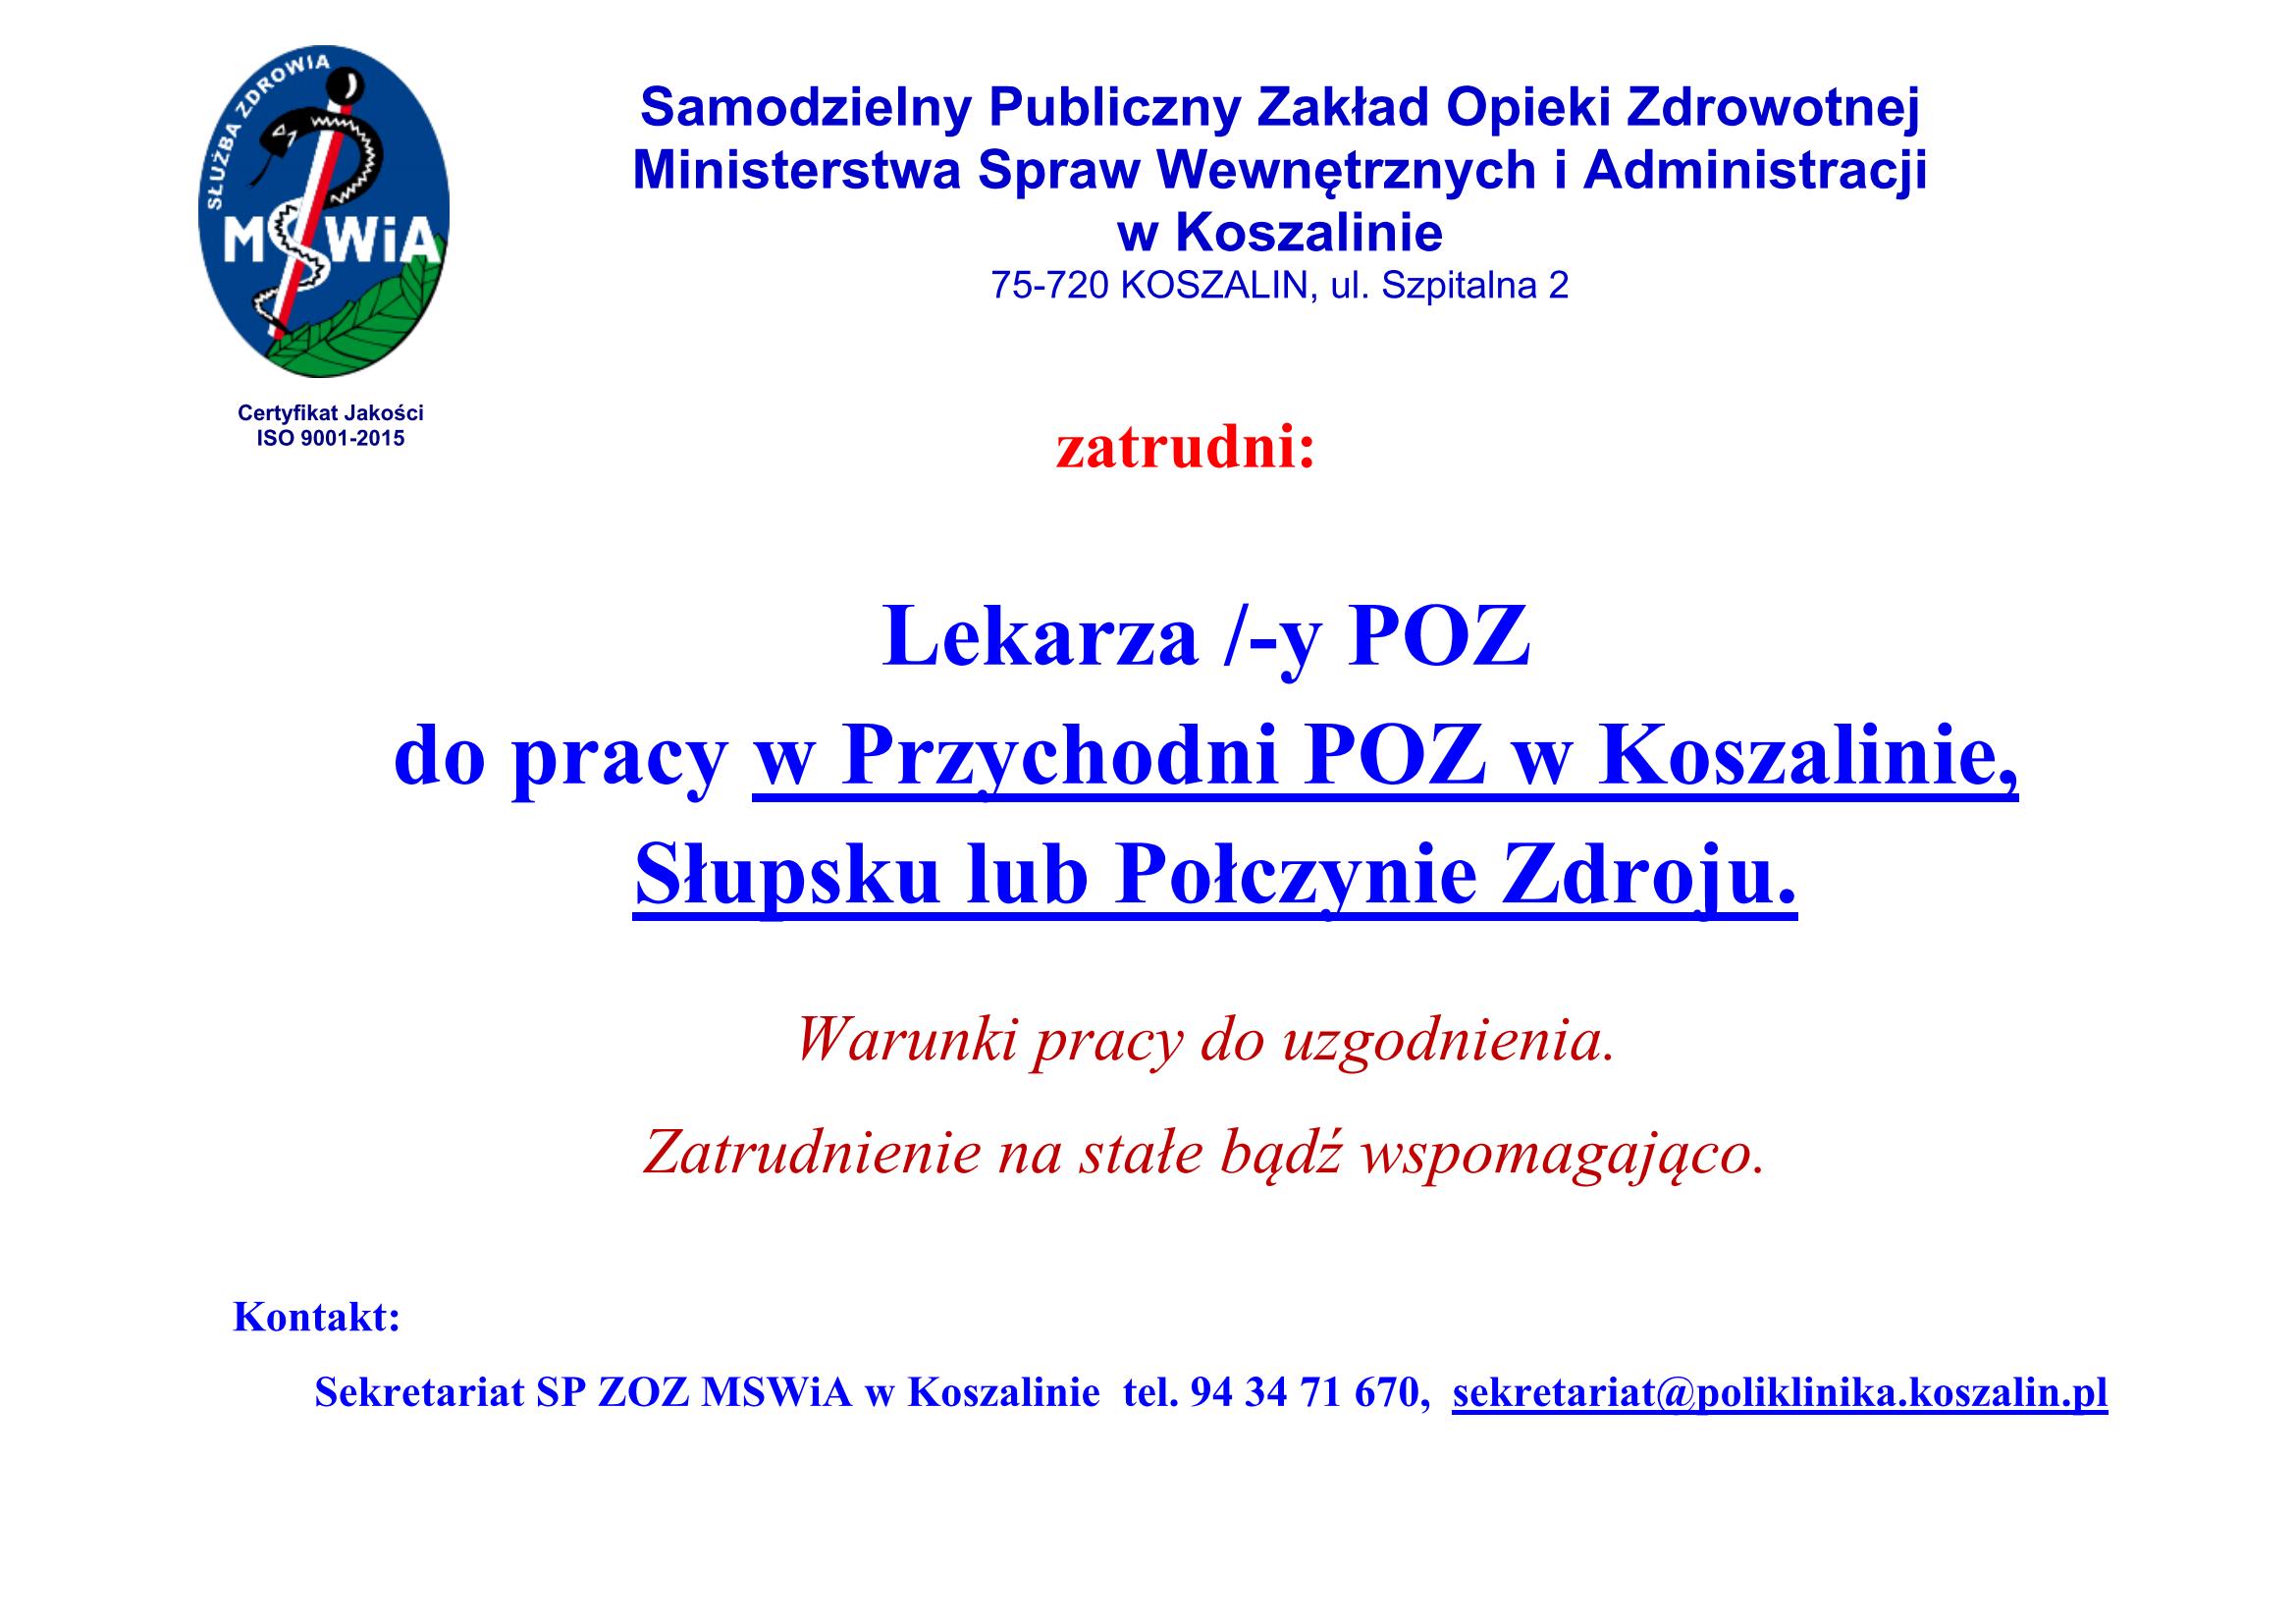 Lekarze_POZ-converted_Page_1.jpeg